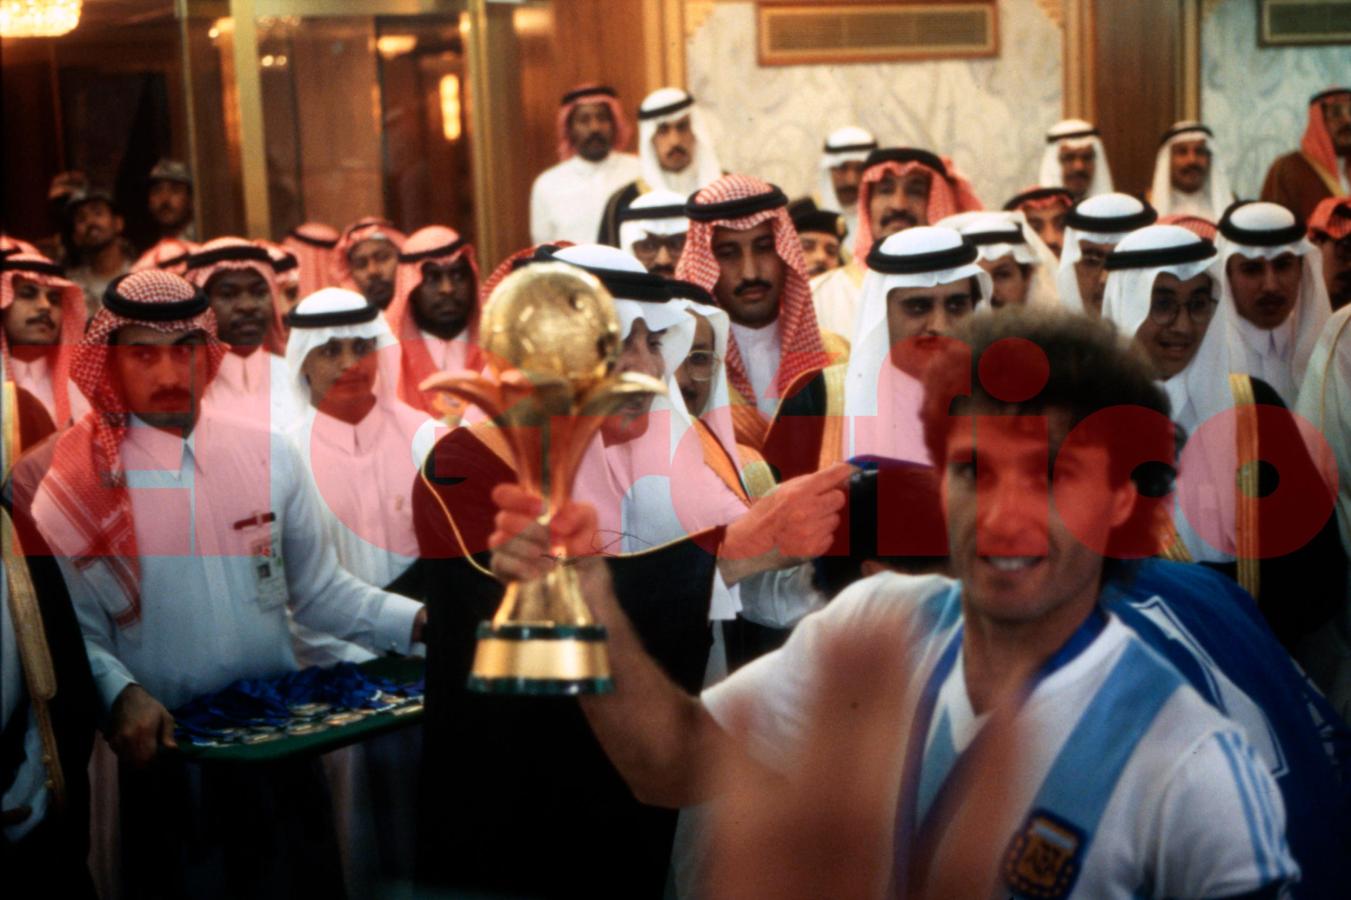 Imagen Oscar Ruggeri alza la Copa Rey Fahd tras vencer a Arabia Saudita. 